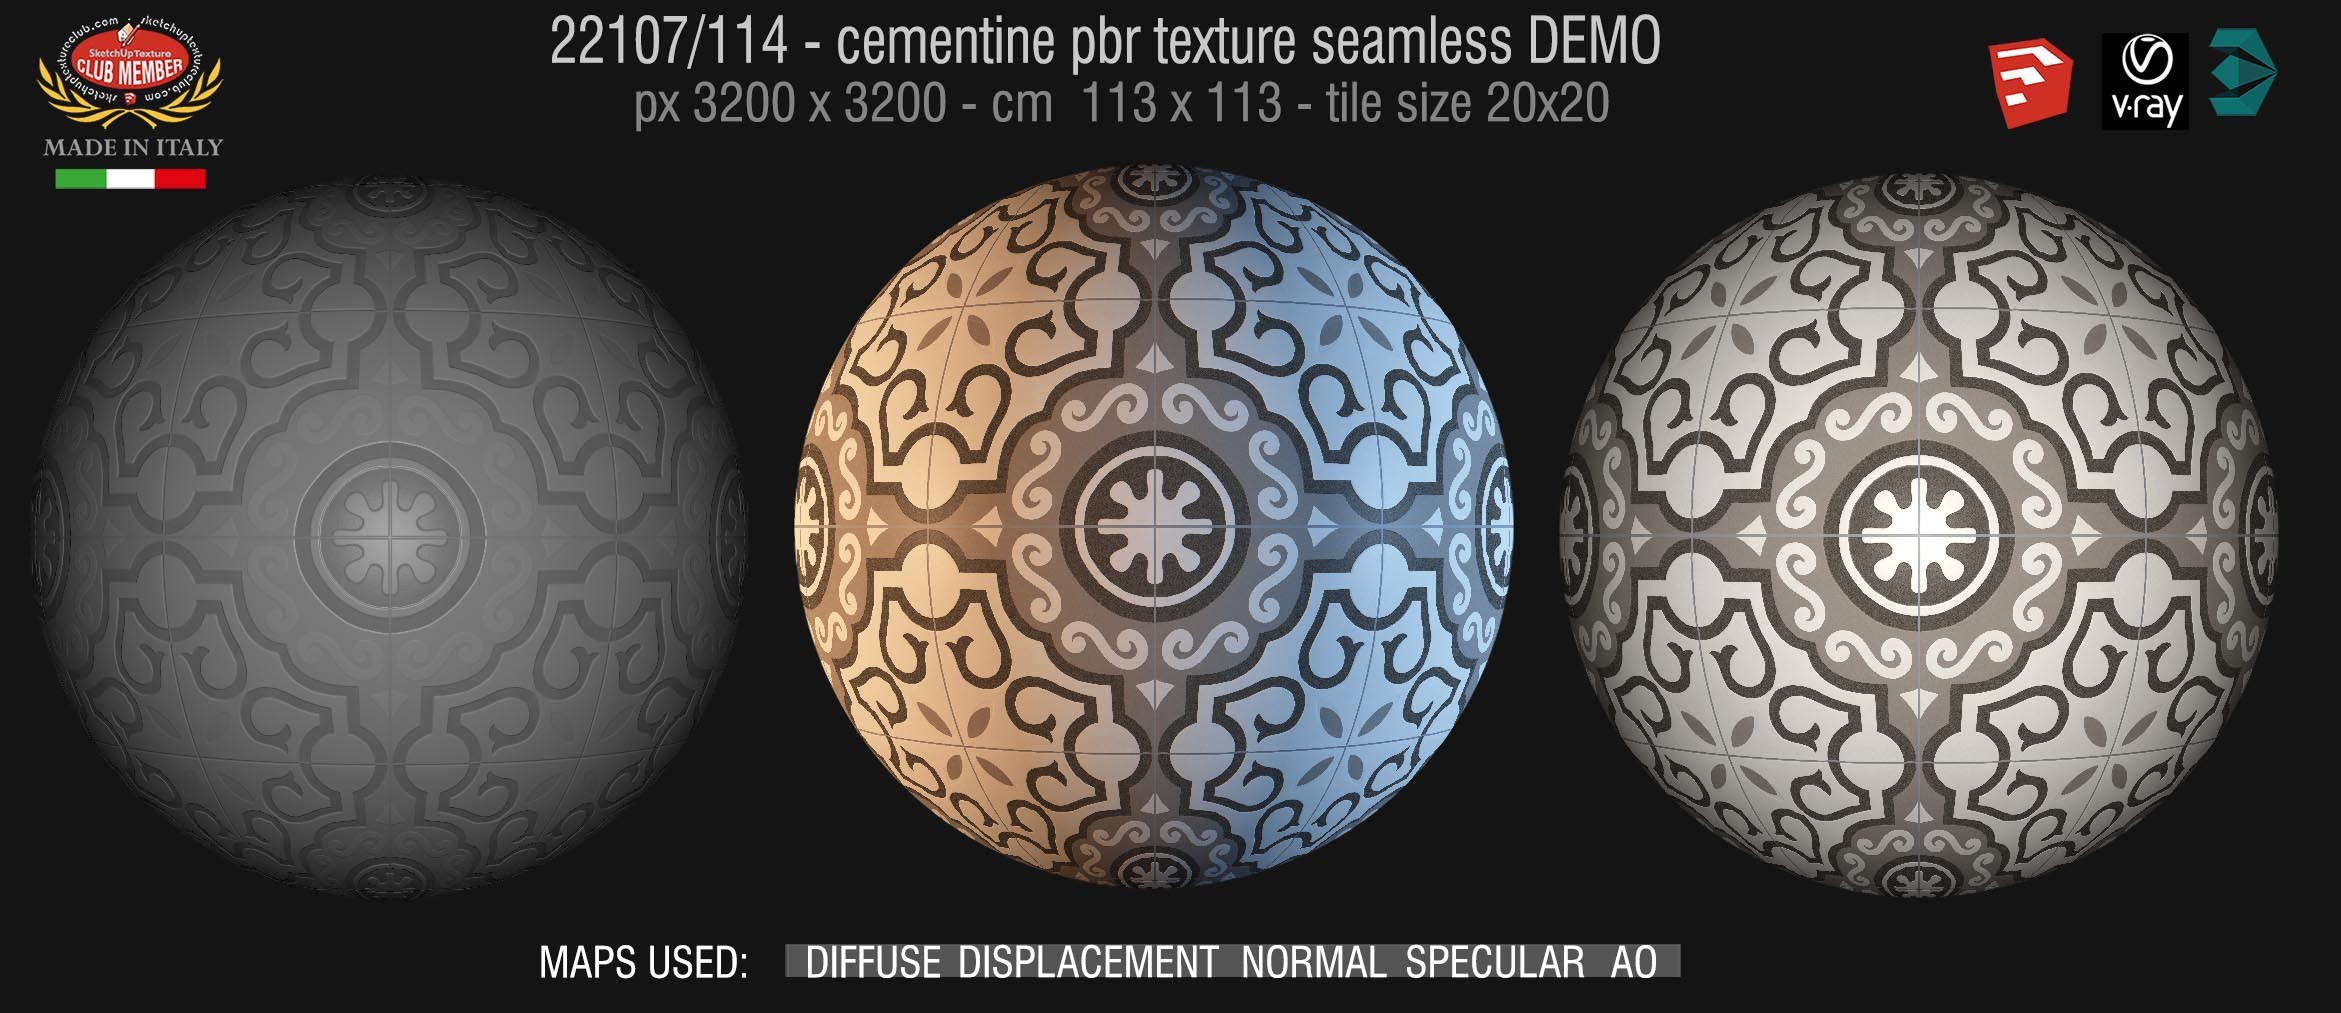 22107114 /cementine tiles Pbr texture seamless demo -  D_Segni Concrete Look by Marazzi